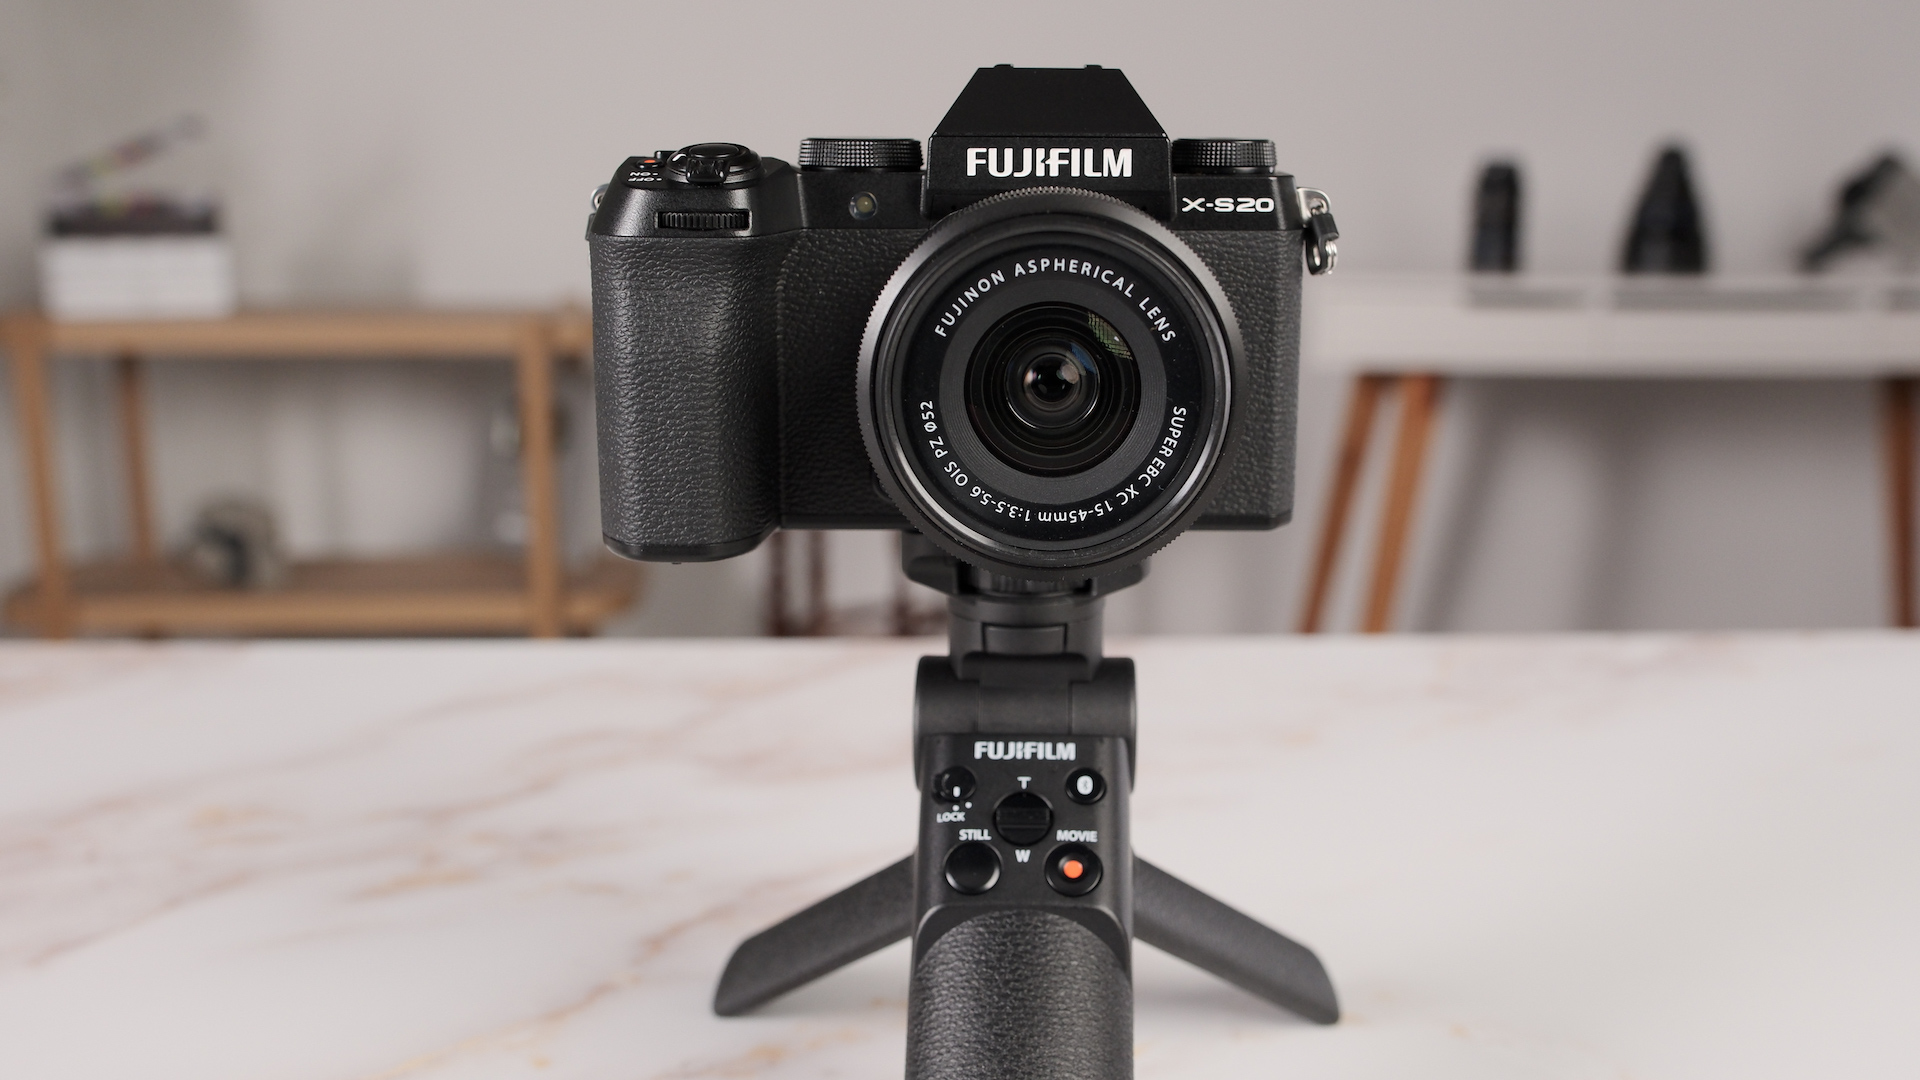 FUJIFILM-X-S20-XC-15-45mm-lens-and-grip.jpg